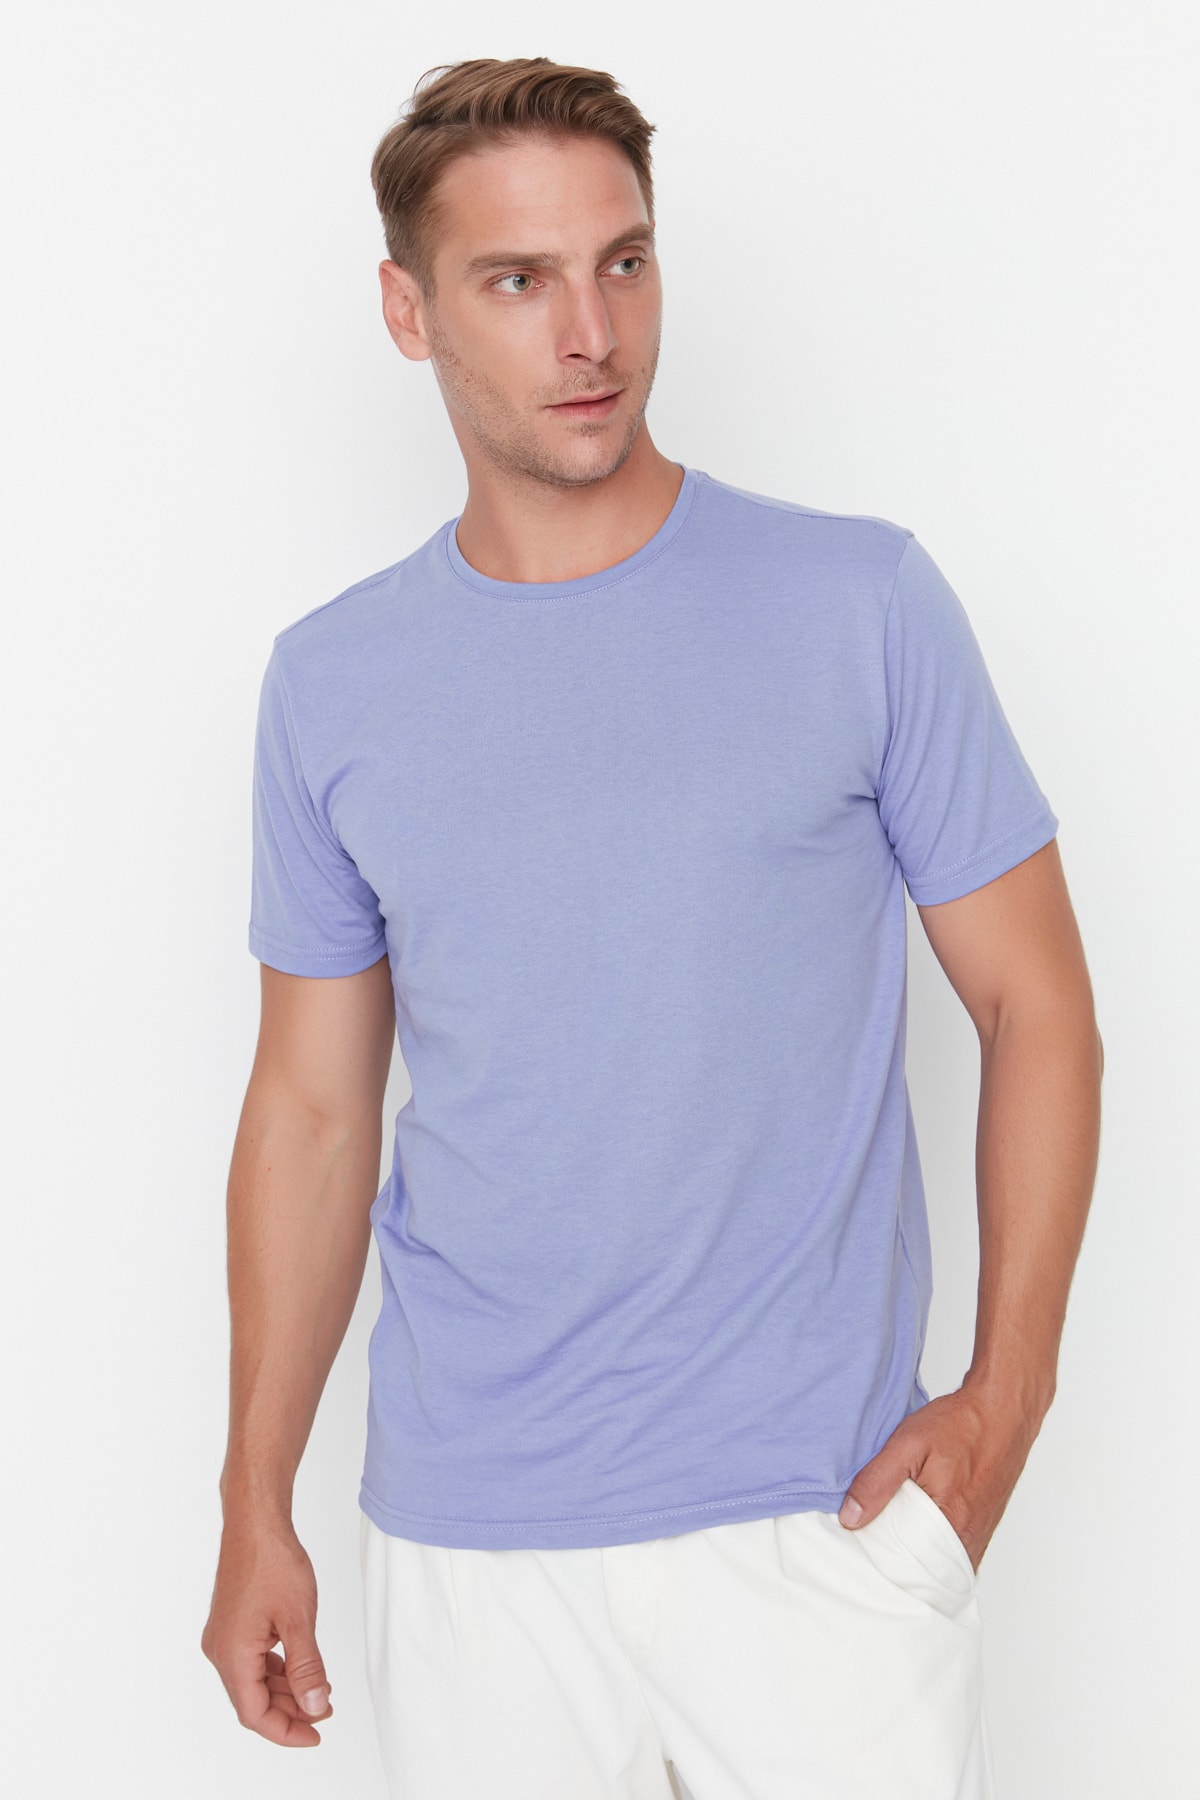 Trendyol Lilac Men's Basic Regular/Regular Cut, Crew Neck Short Sleeved T-Shirt